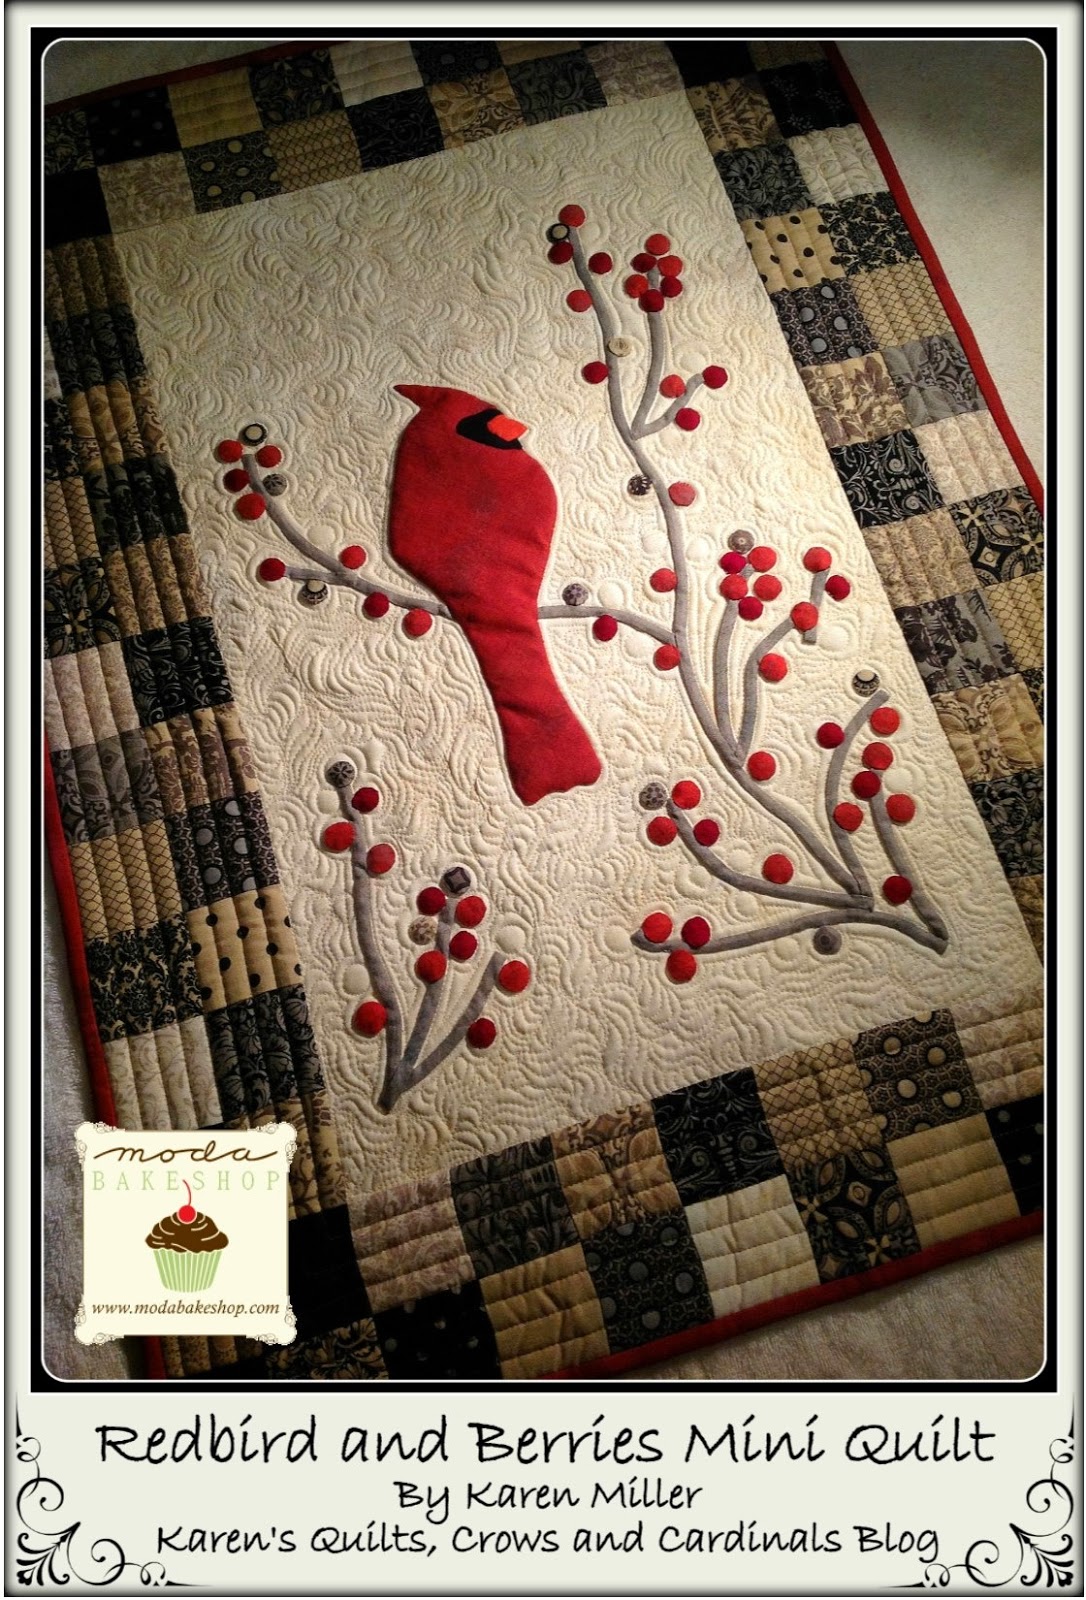 Redbirds and Berries Mini Quilt